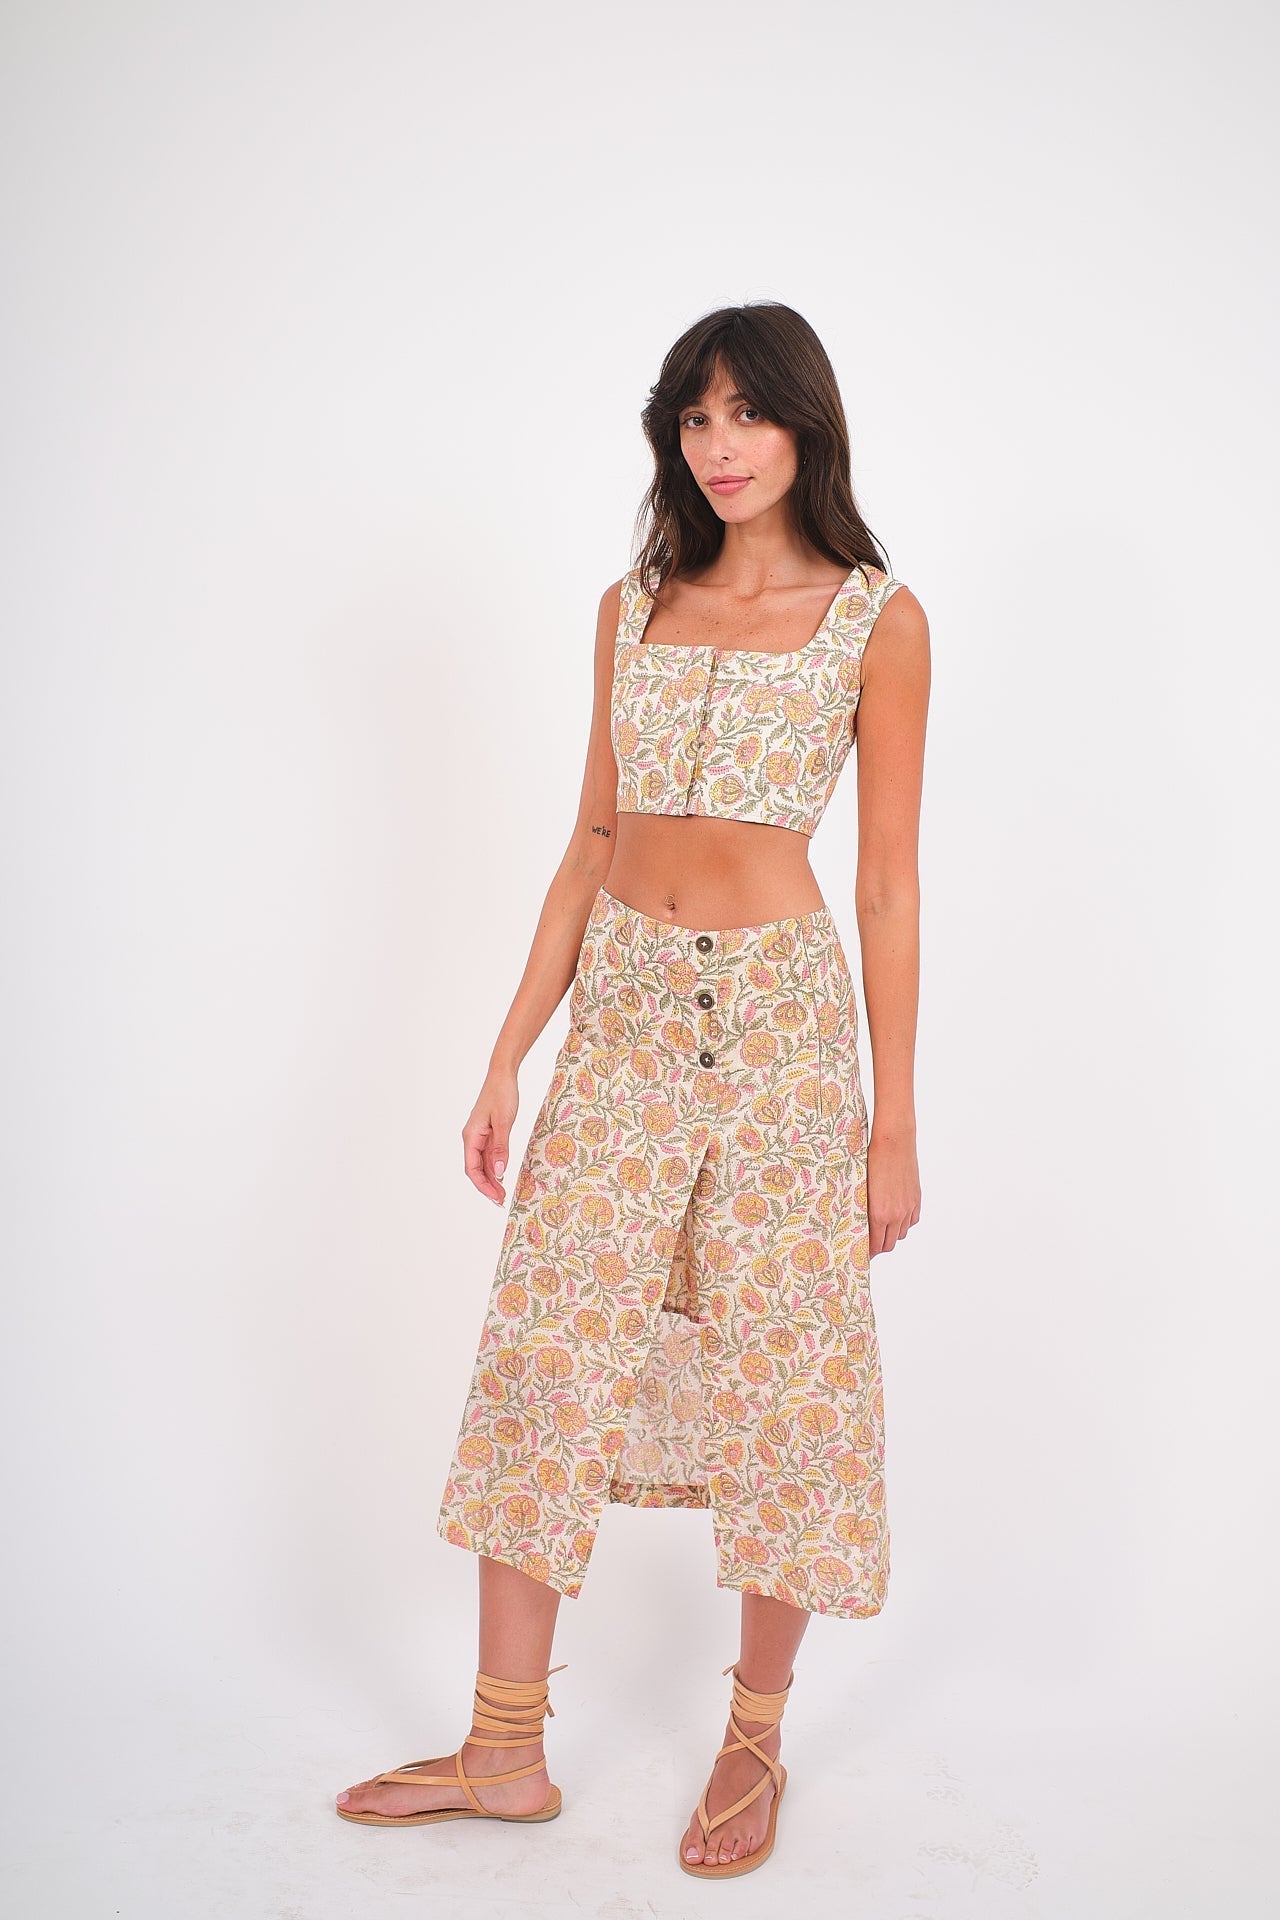 Raya Skirt - Beige Blooms by Desert Queen